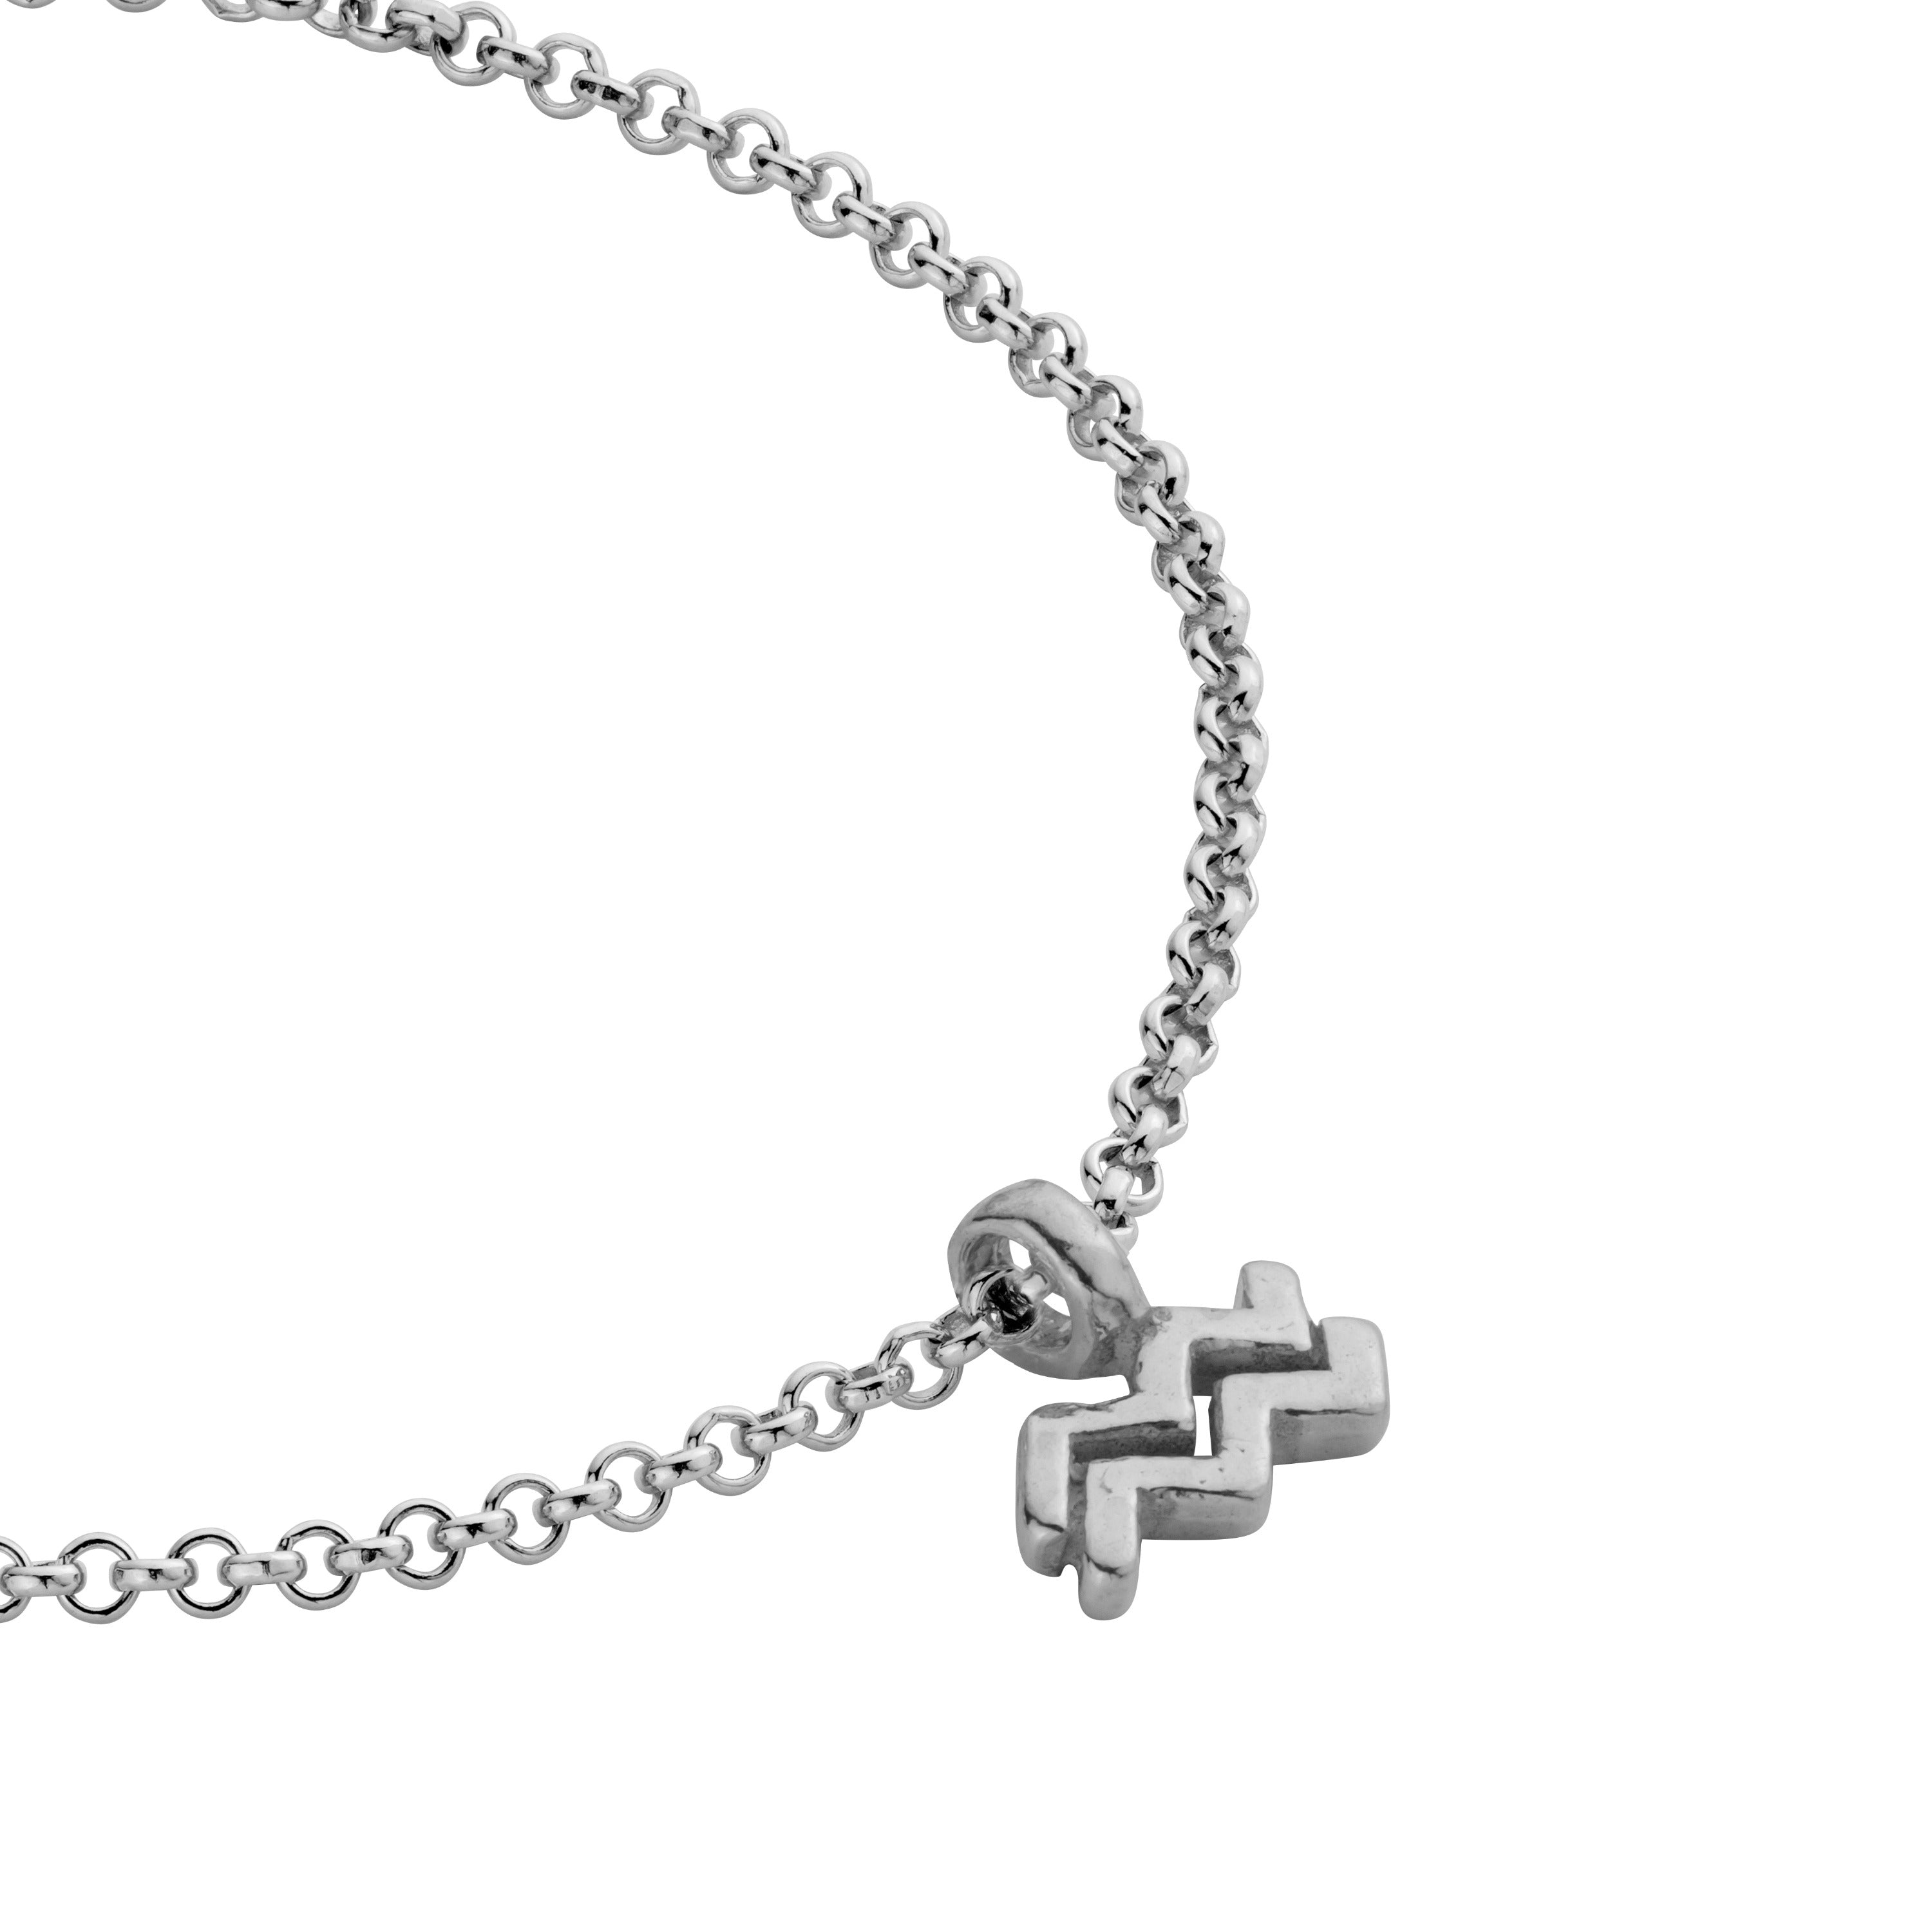 Silver Mini Aquarius Horoscope Chain Bracelet